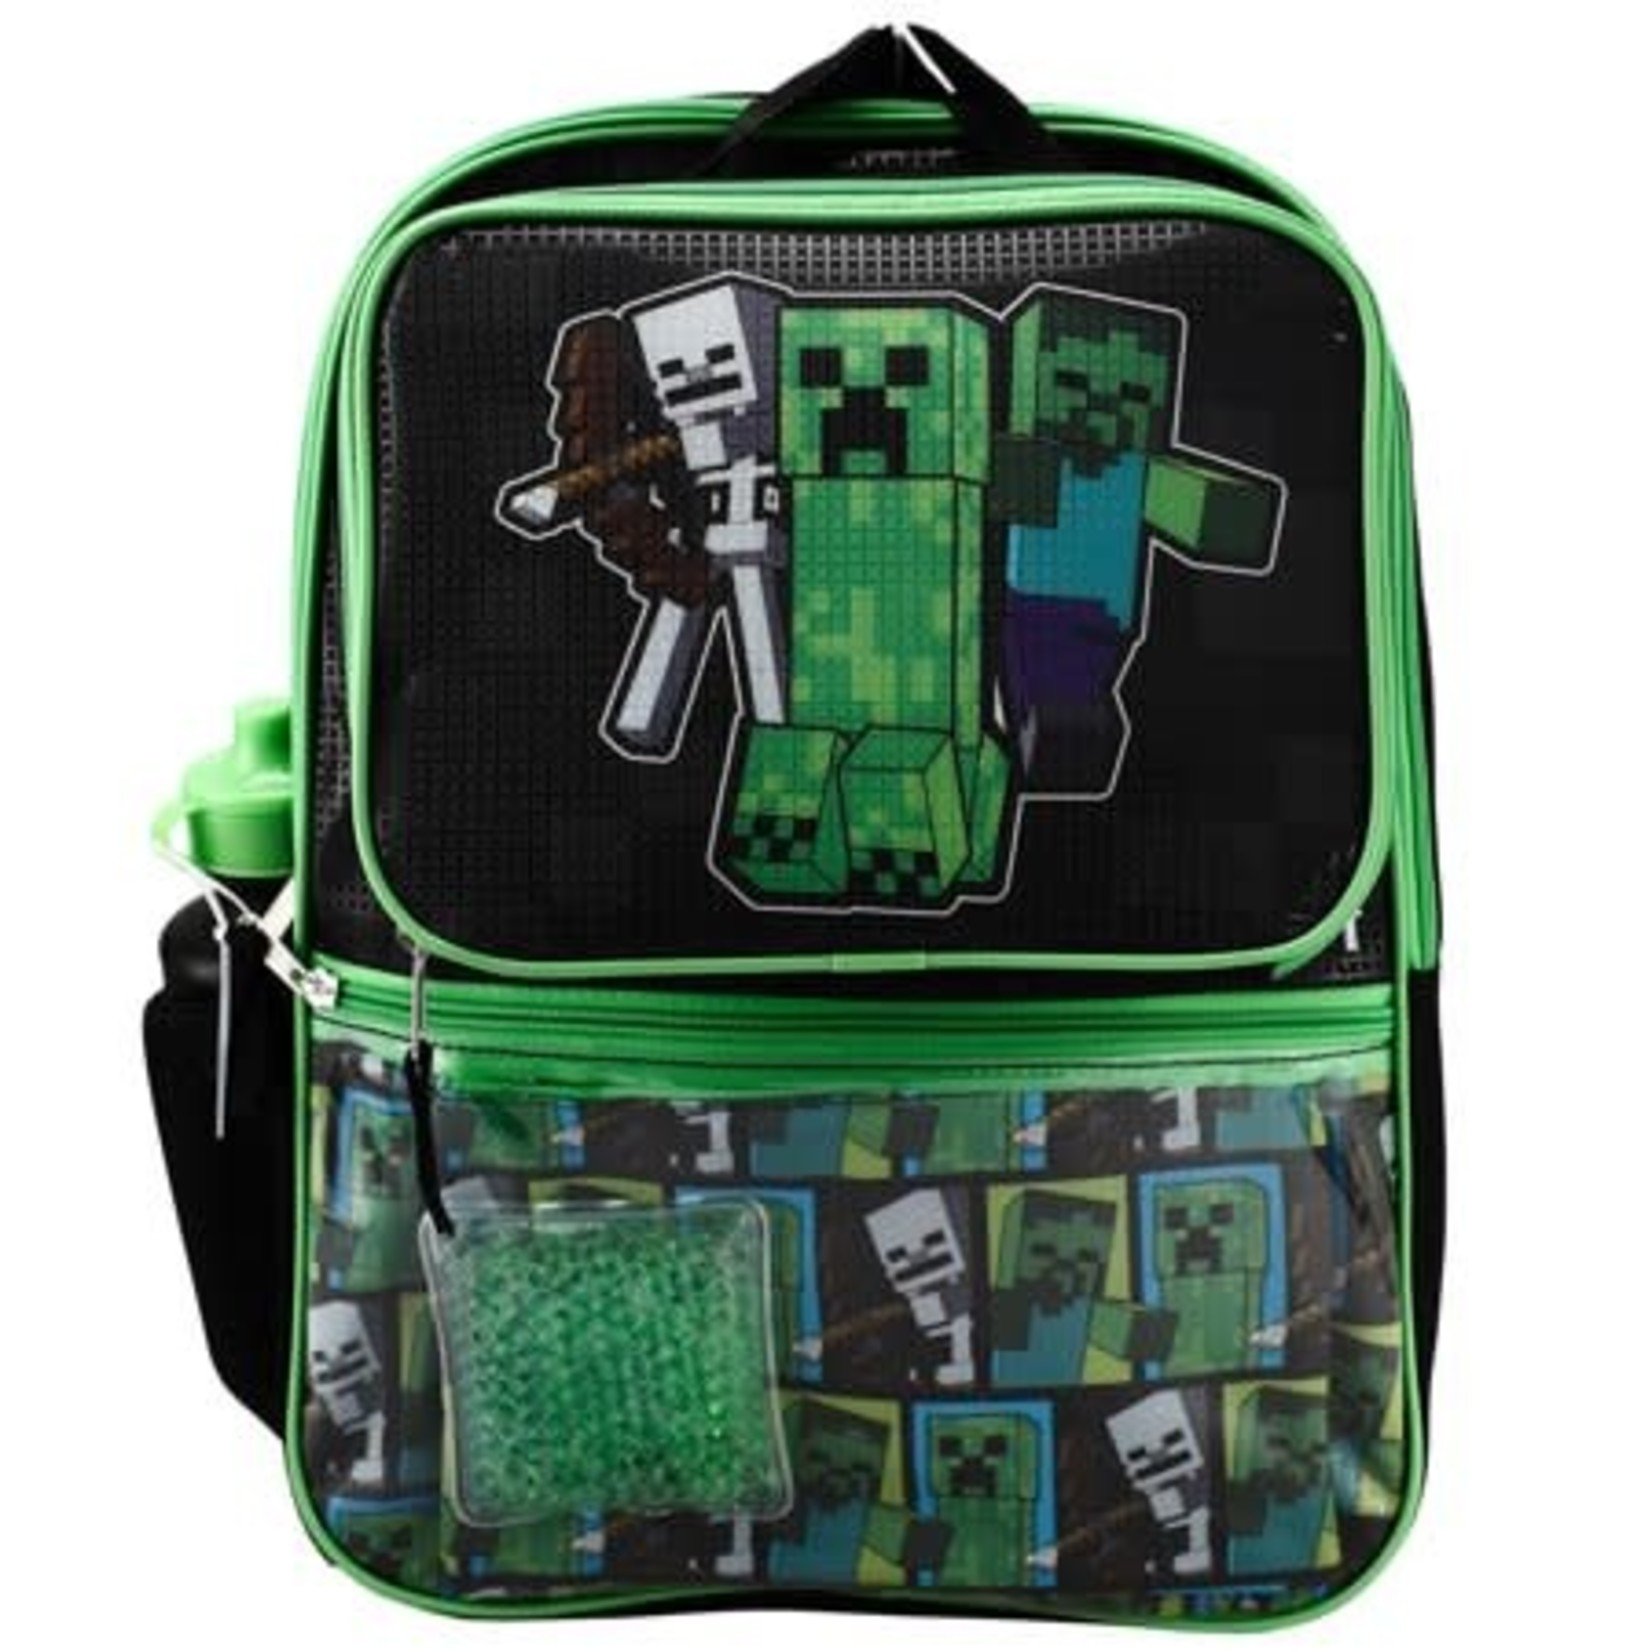 Bioworld Minecraft Backpack Set